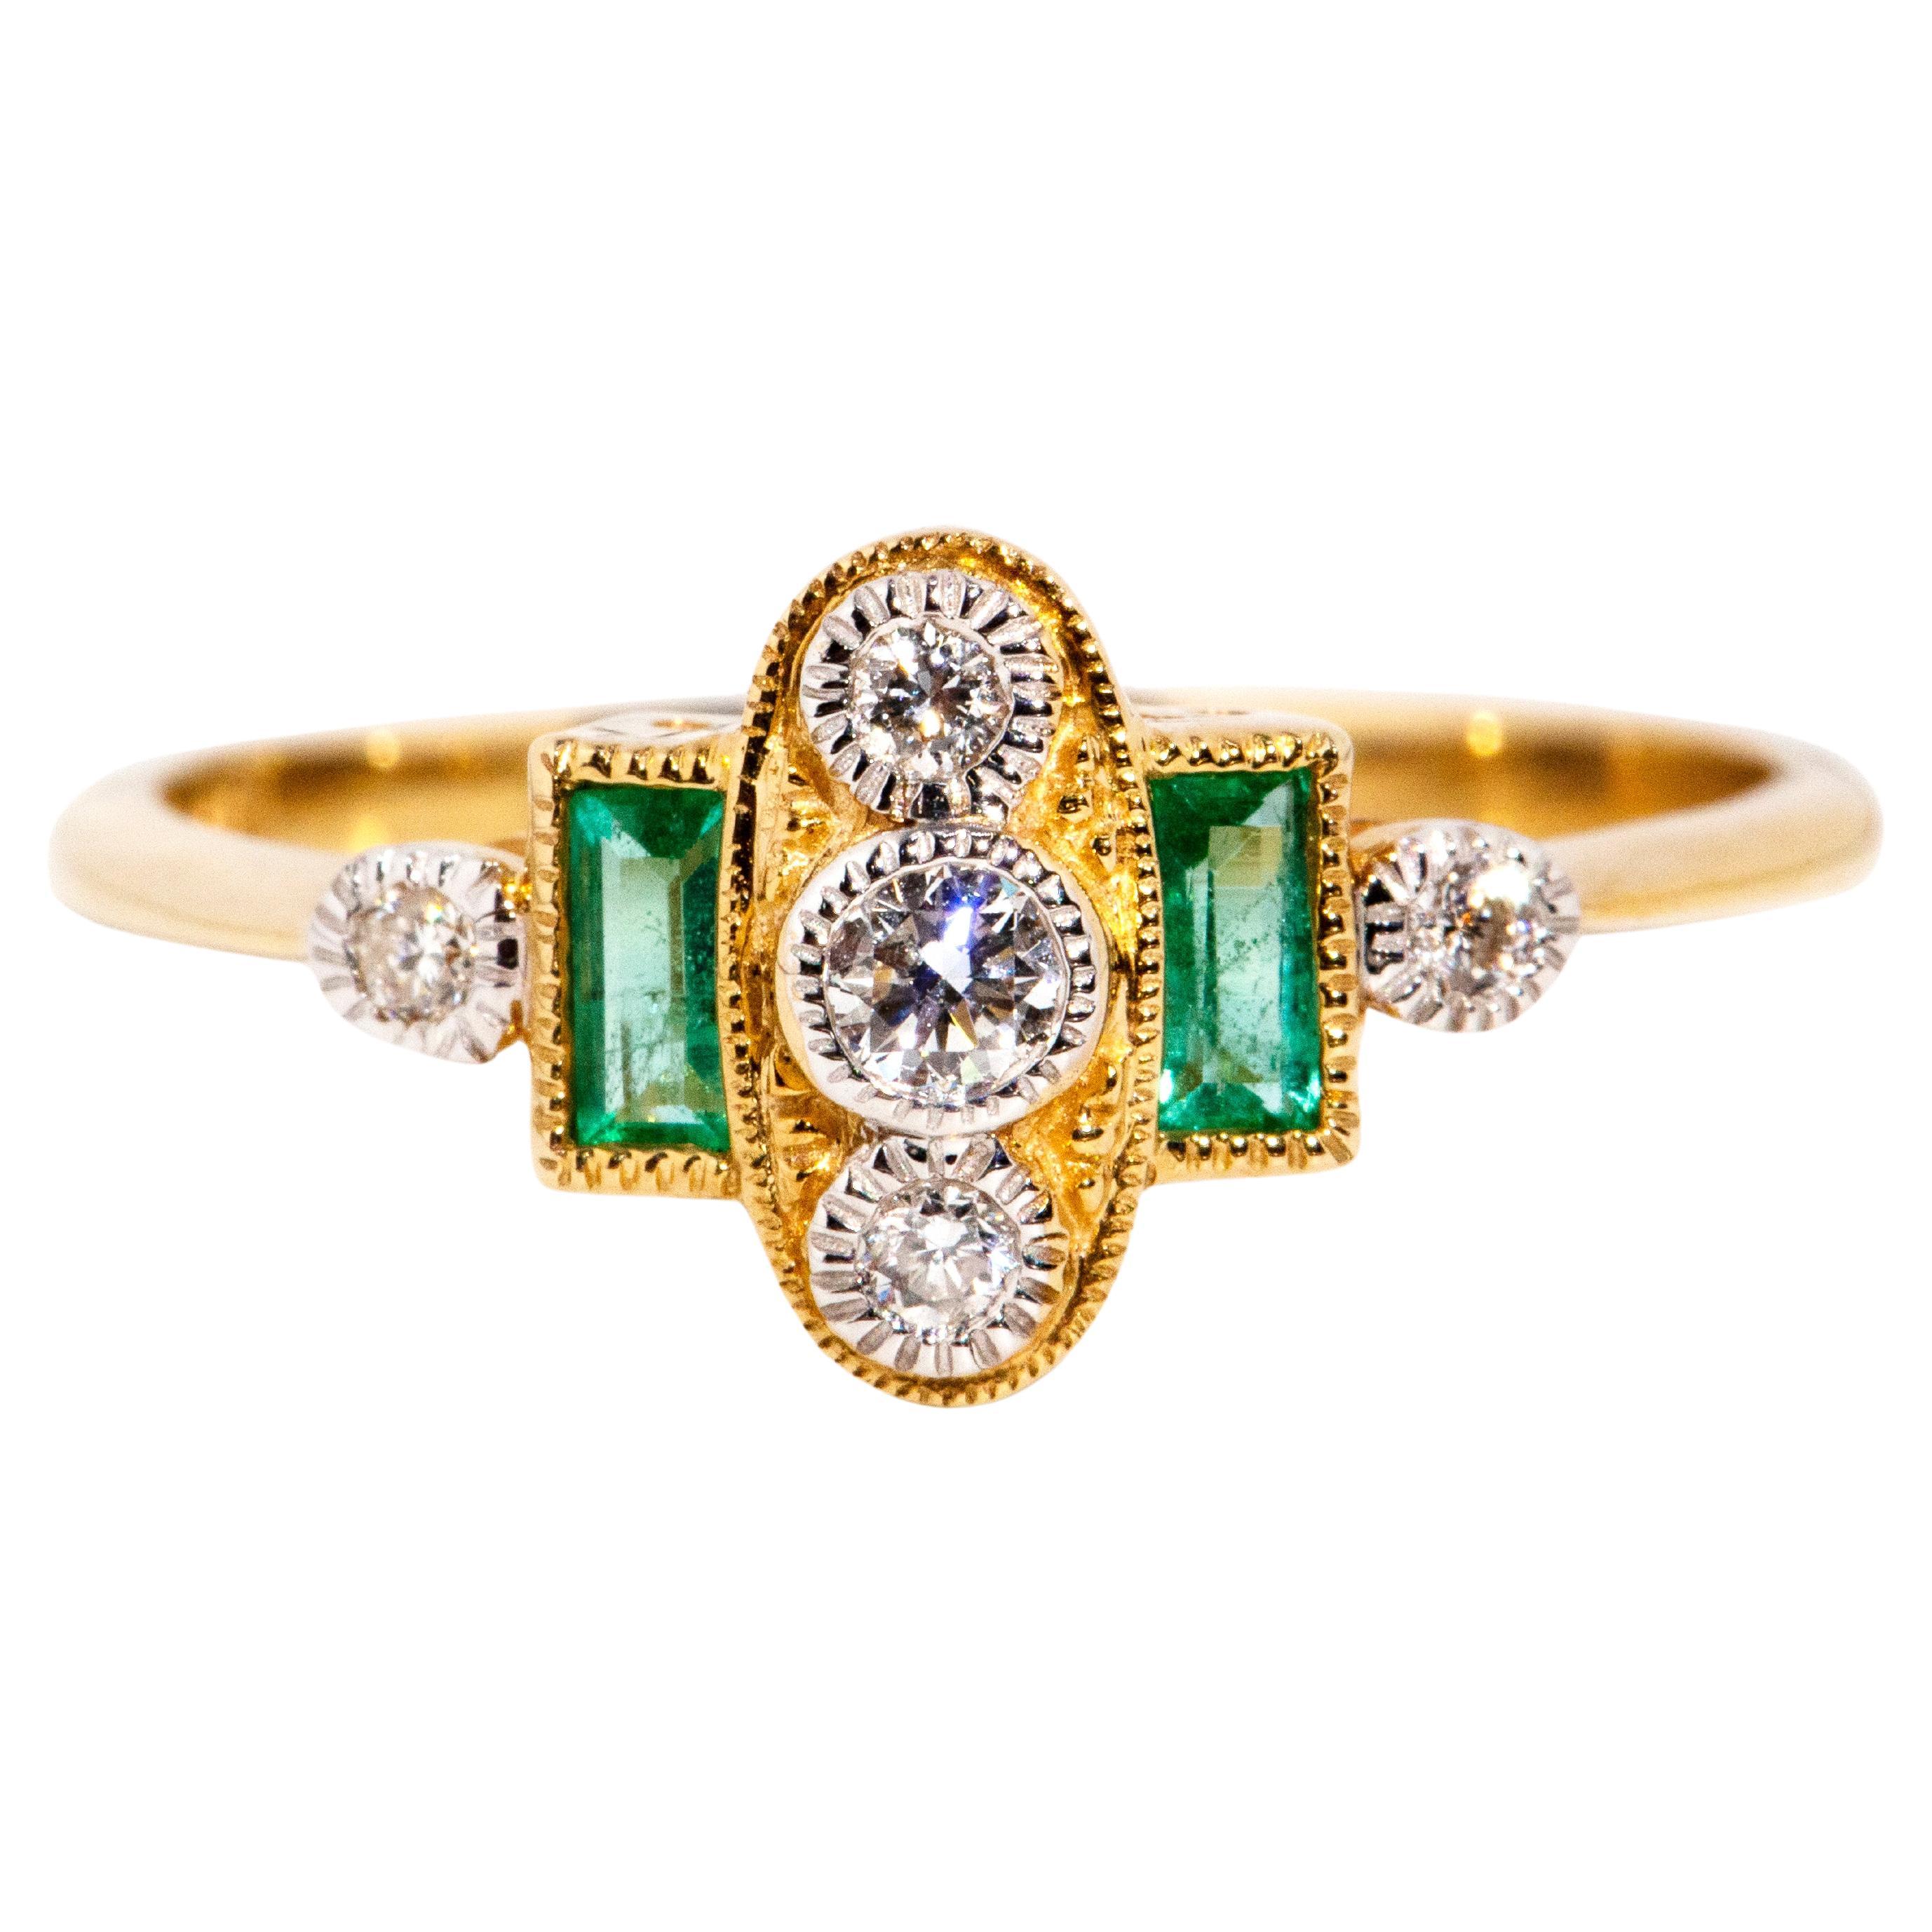 Vintage inspirierter Diamant & leuchtend grüner Smaragd-Cluster-Ring 9 Karat Gelbgold